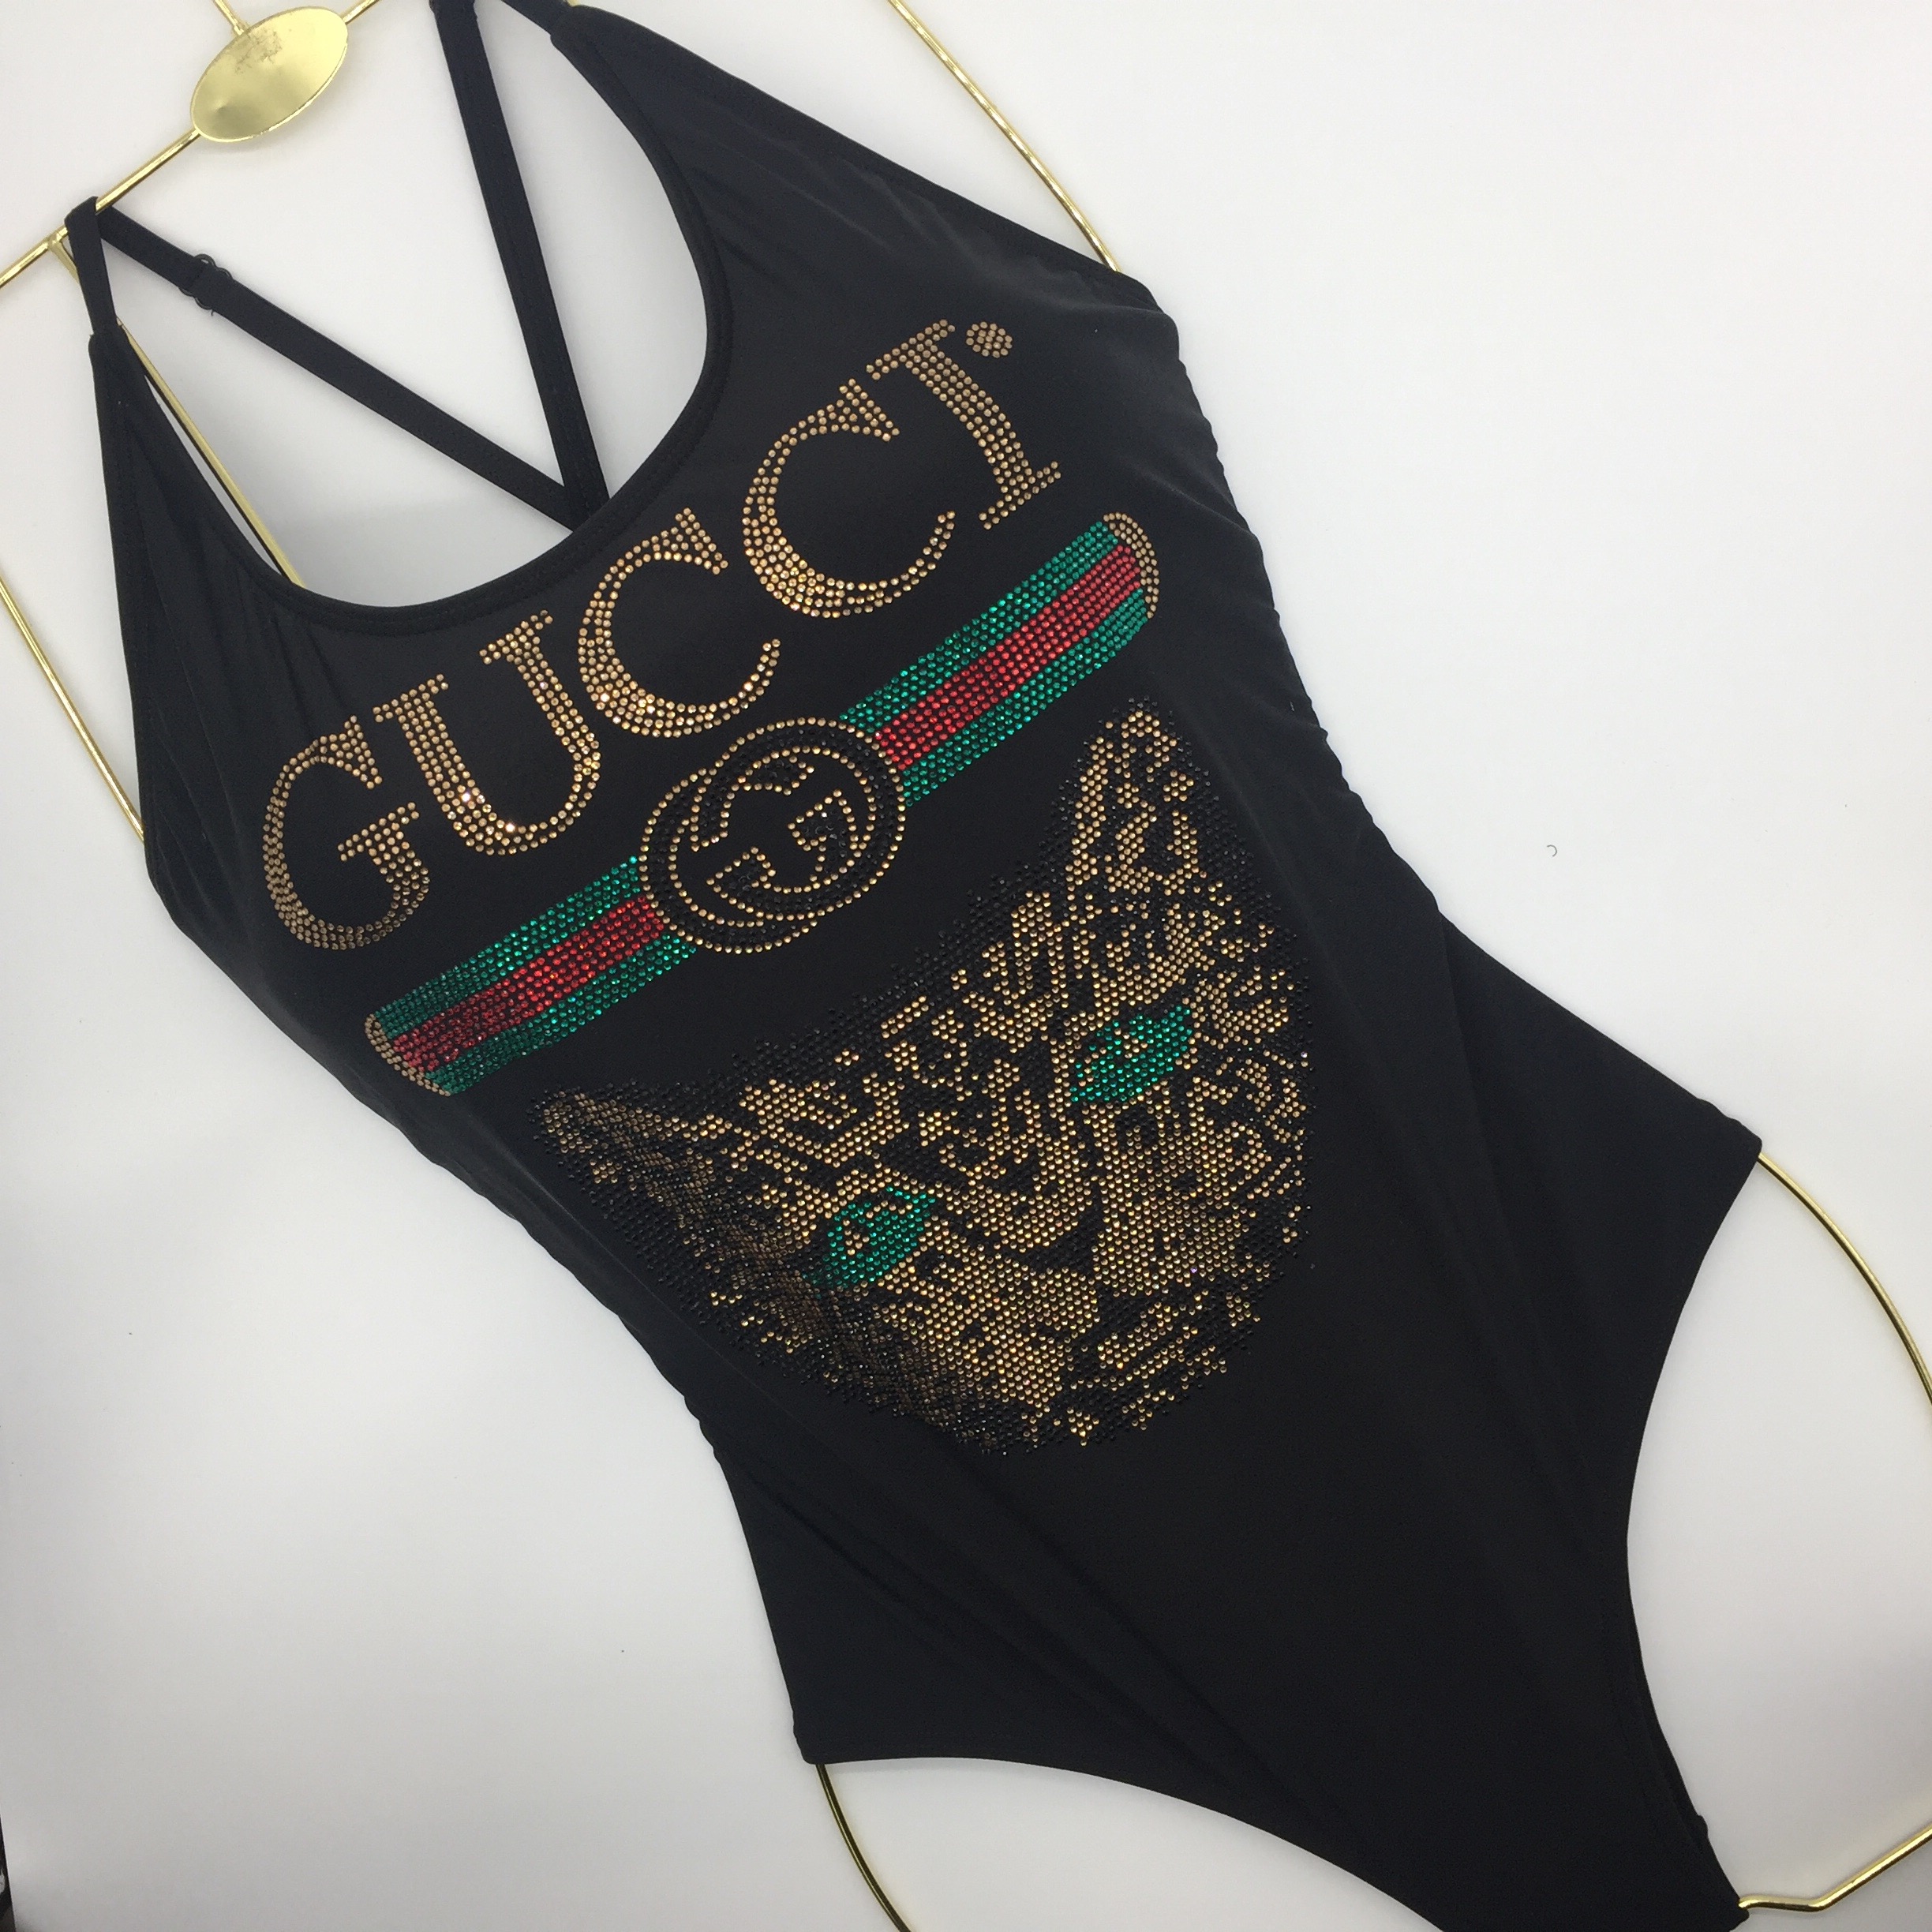 gucci swimwear 2019